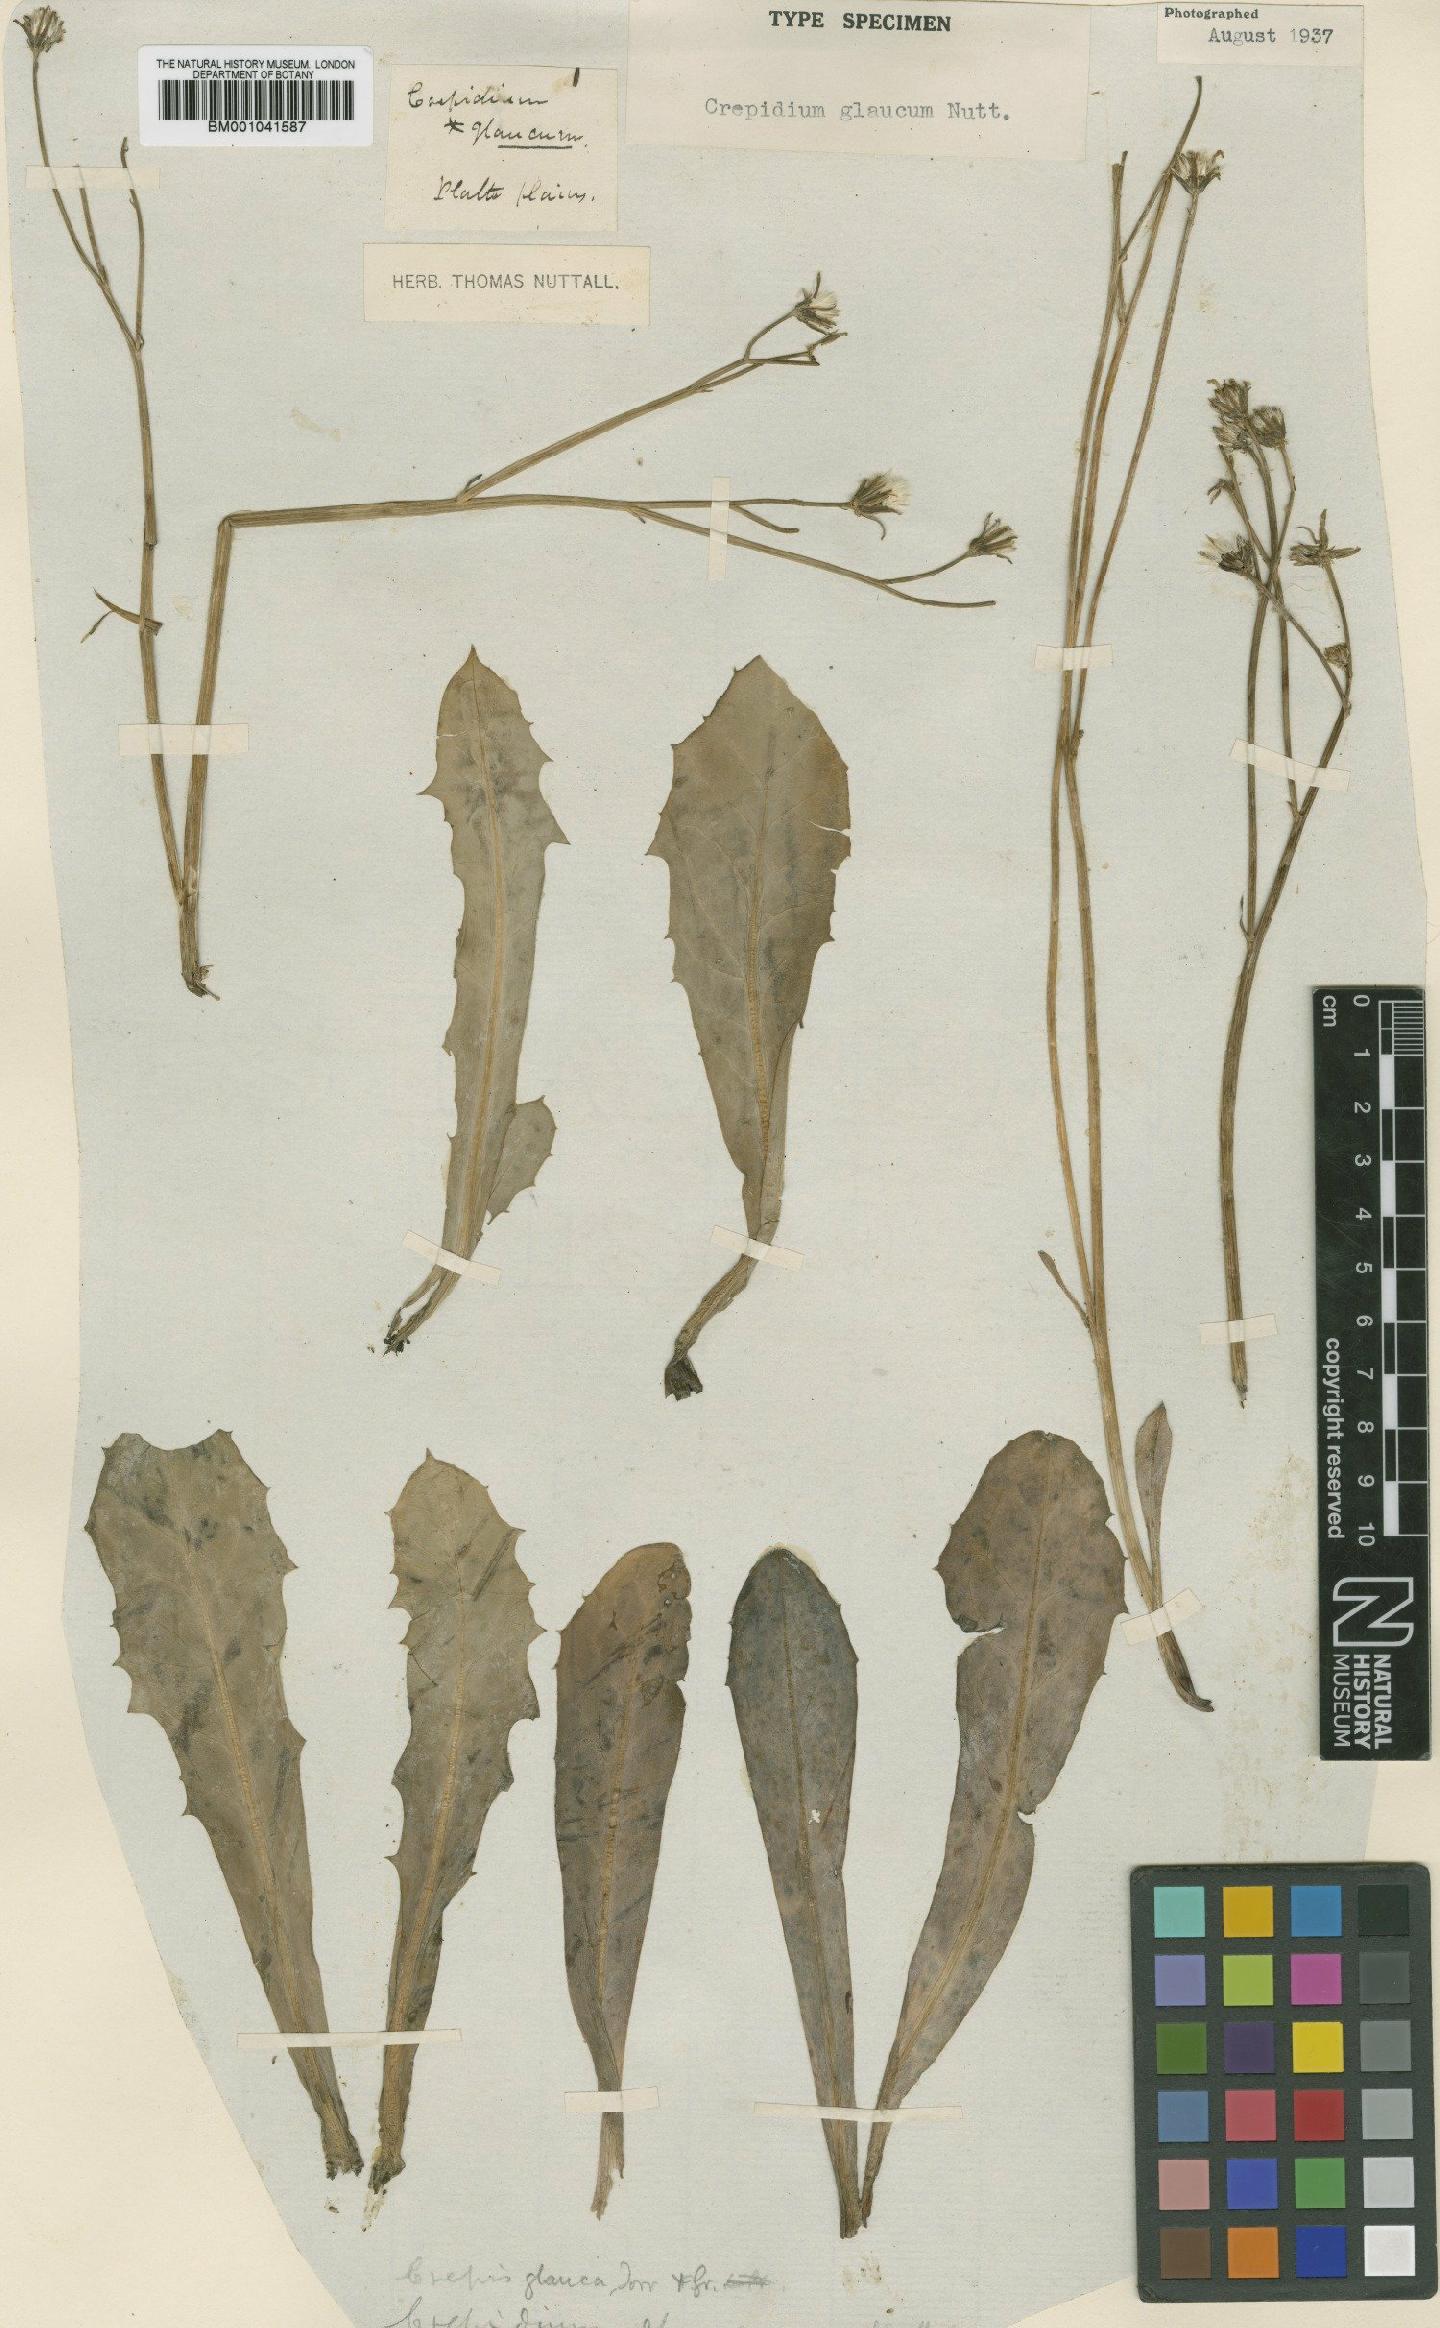 To NHMUK collection (Crepis runcinata subsp. glauca (Nutt.) Babc. & Stebbins; Type; NHMUK:ecatalogue:1162270)